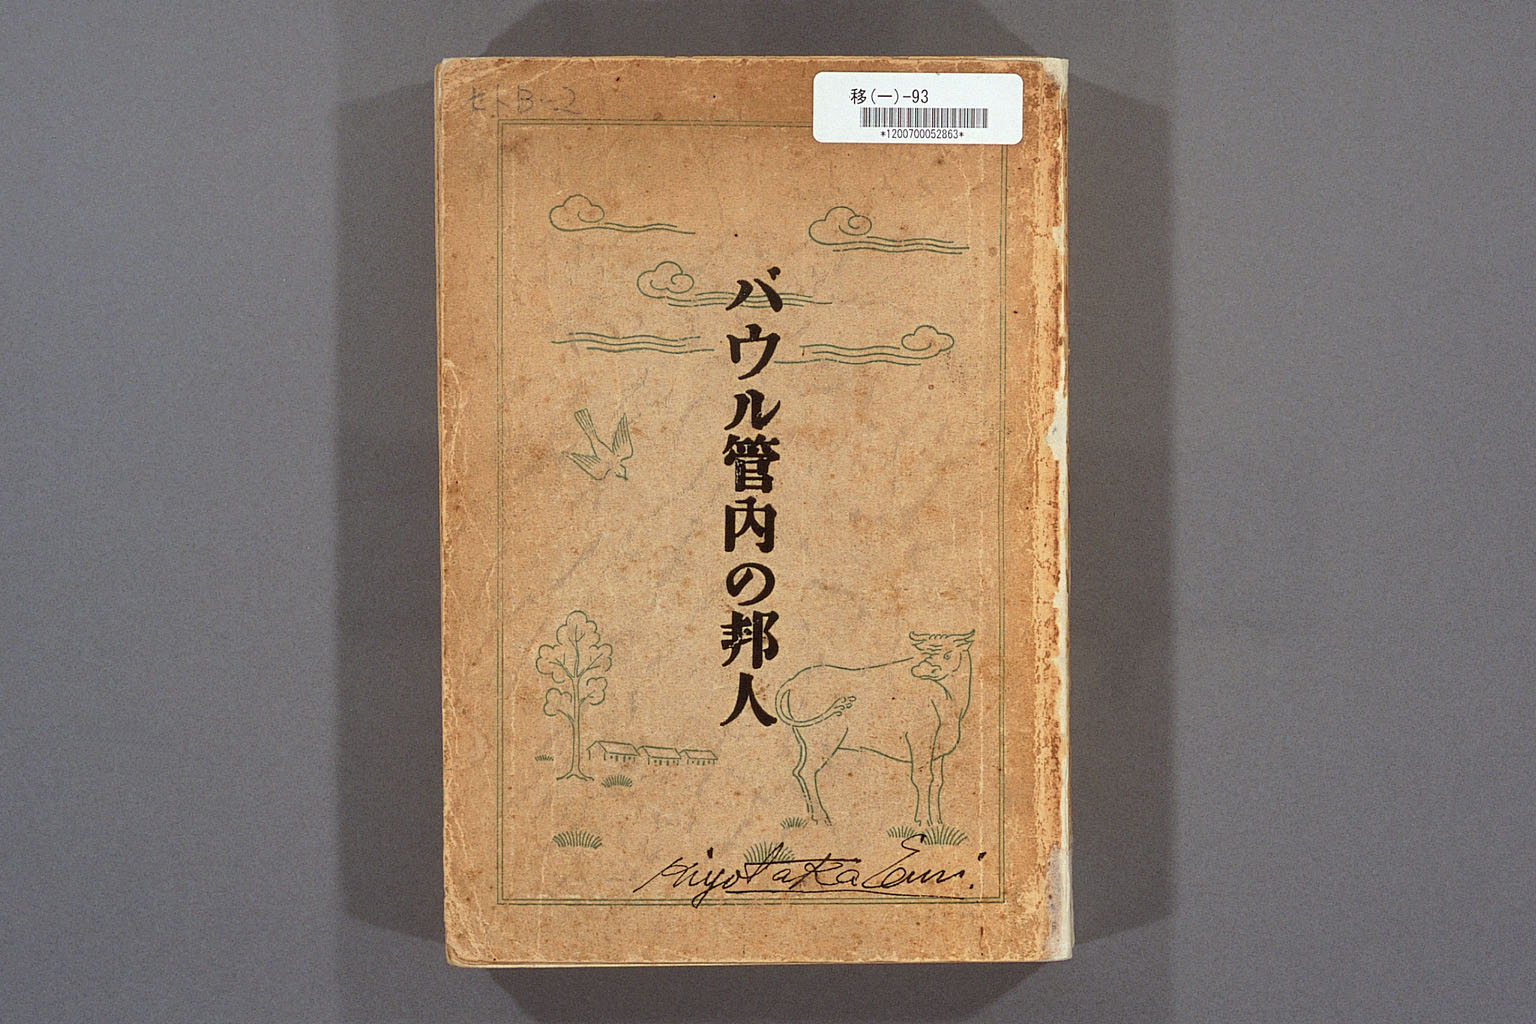 Image “Shungoro Wako's "Return to Japan or permanently settle"”